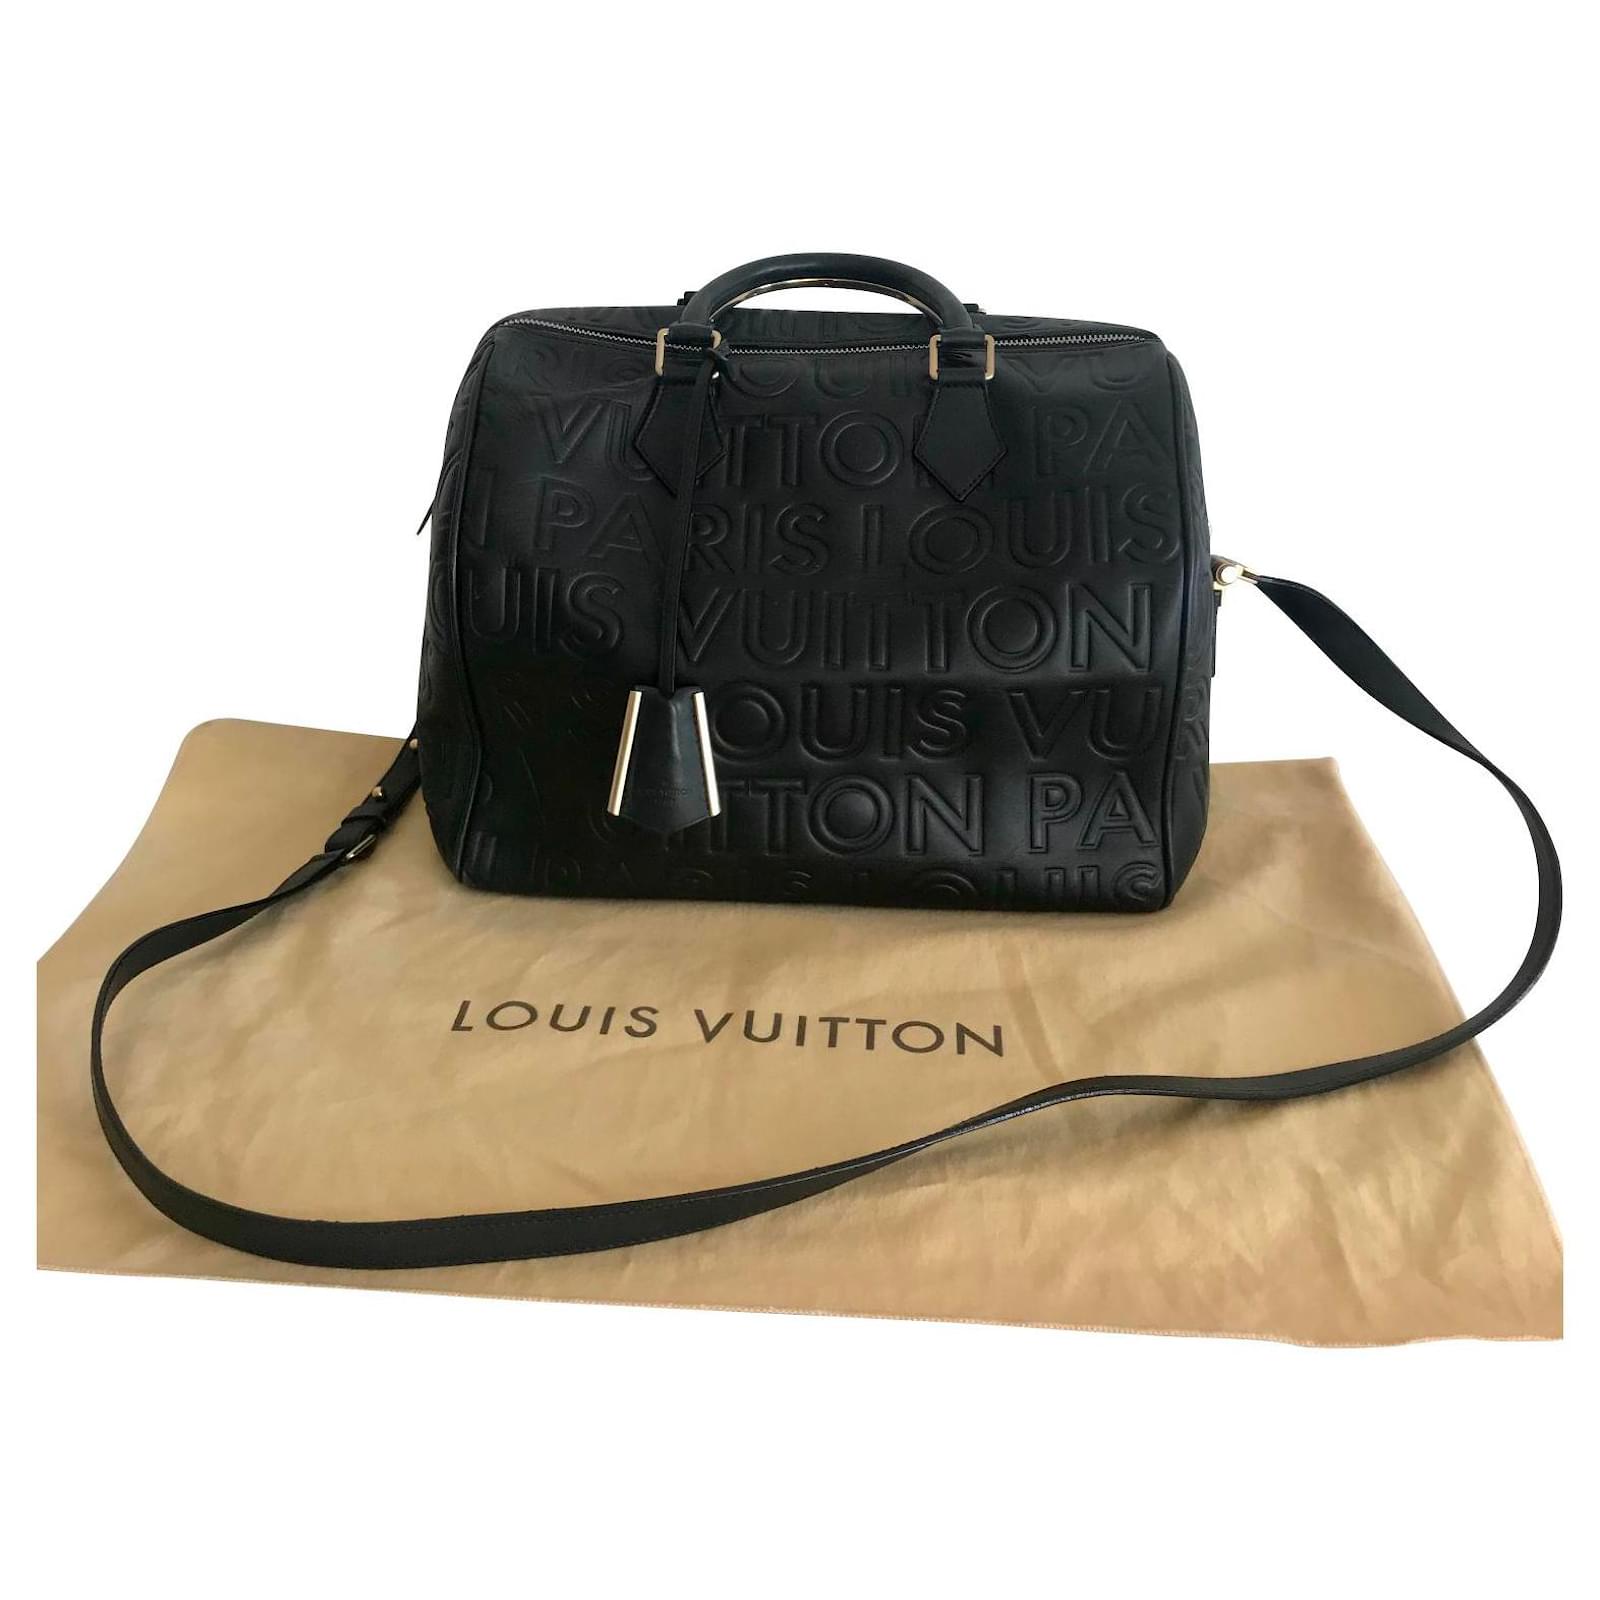 Louis Vuitton Speedy 30 cm Editions Limitées handbag in black